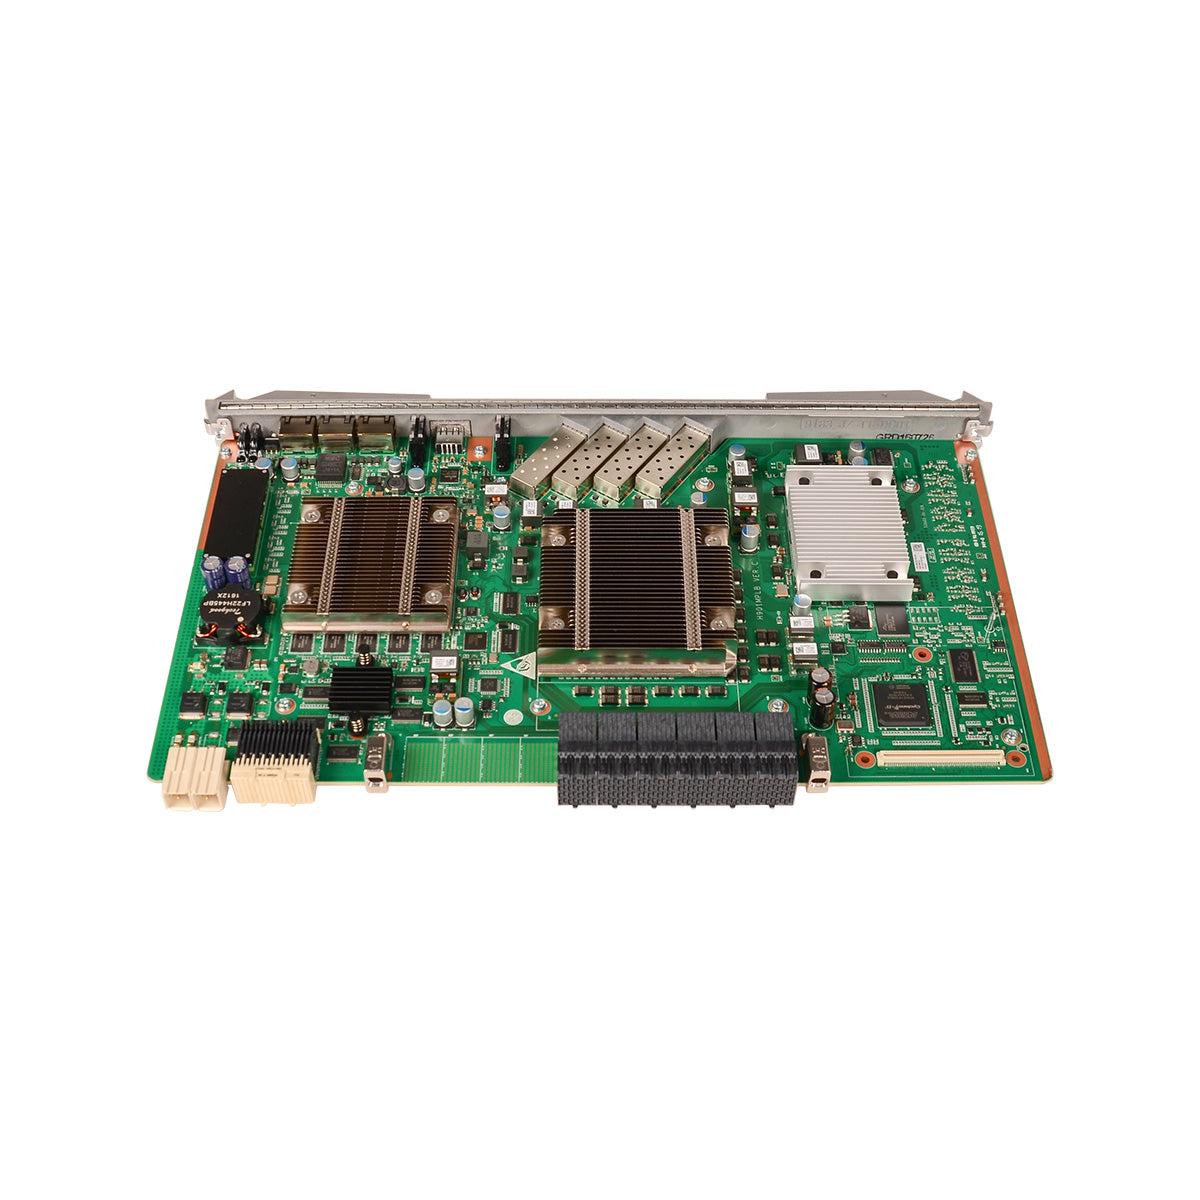 Huawei H901MPLA Main Control Board for MA5800-X17/MA5800-X15/MA5800-X7 OLT